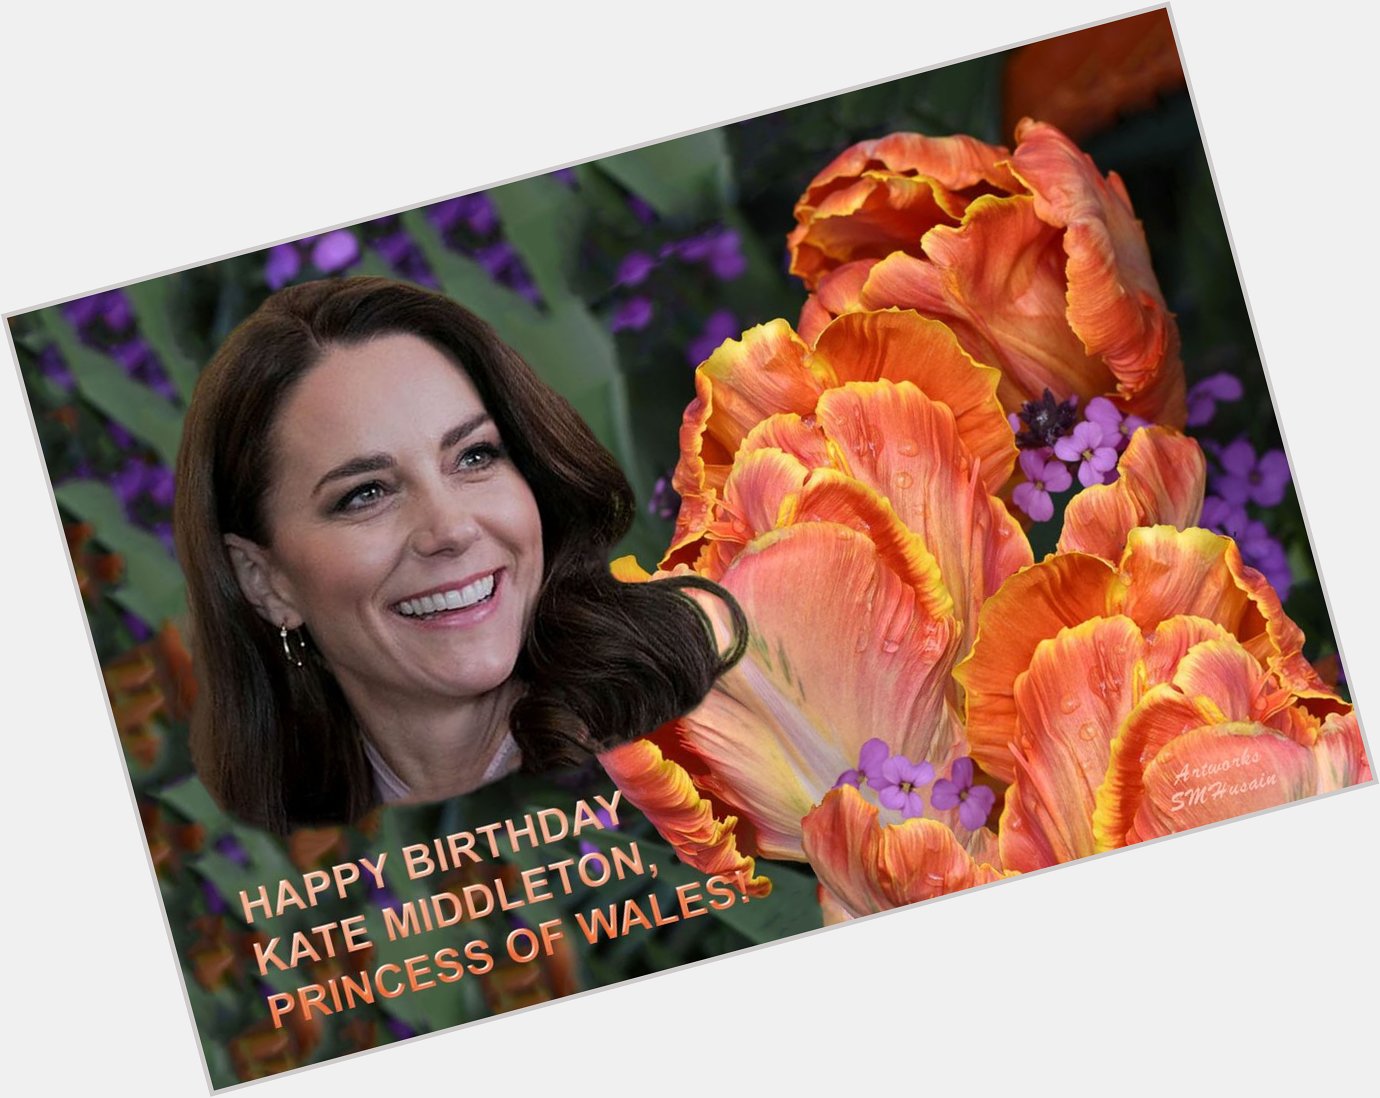 Happy Birthday Kate Middleton,
Princess of Wales! 